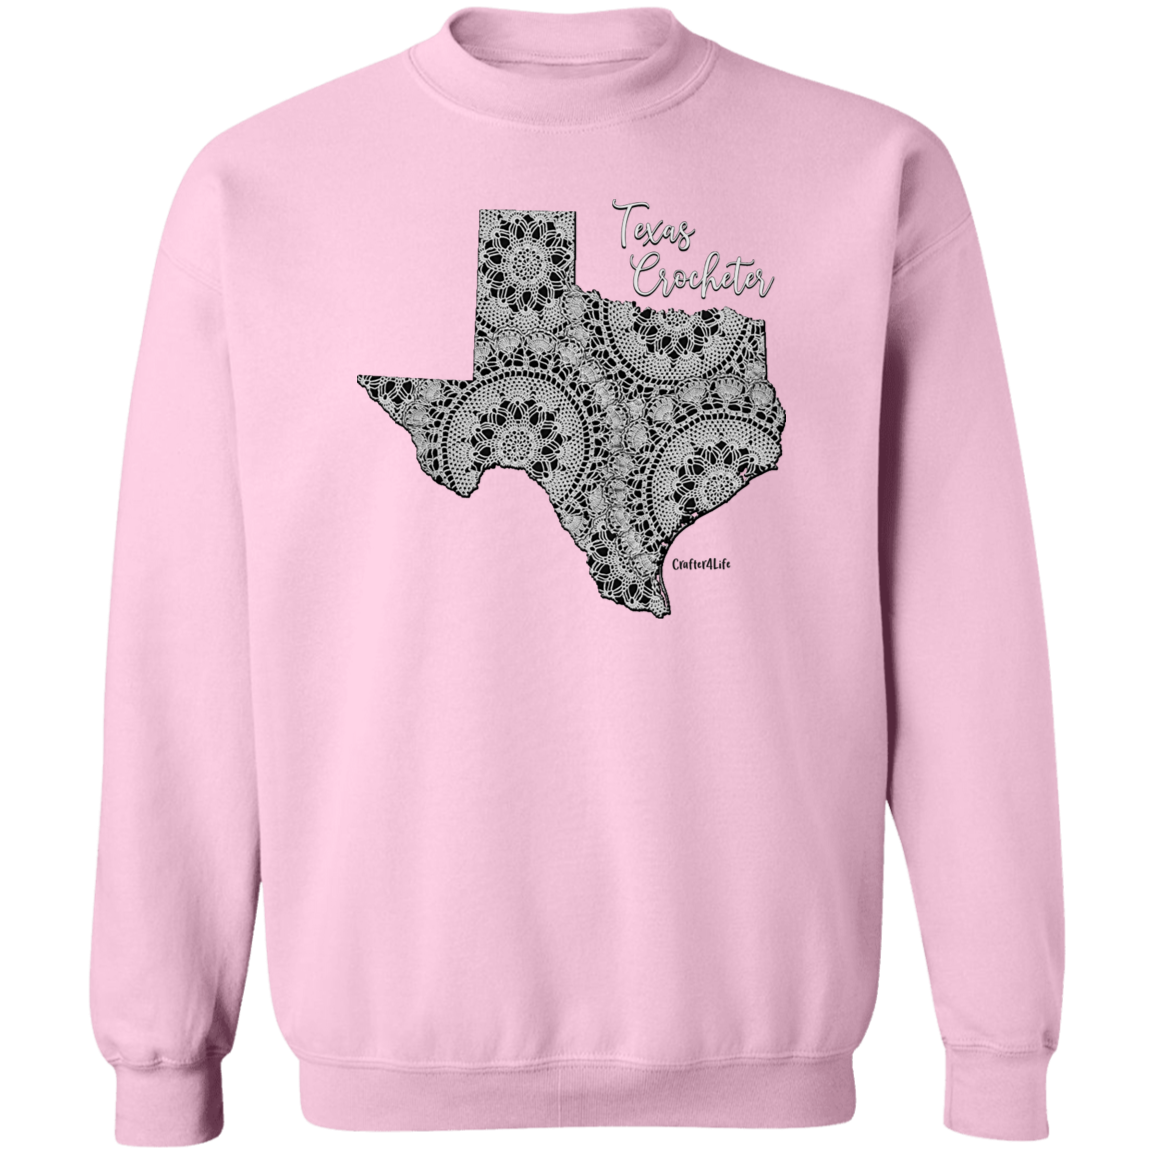 Texas Crocheter Crewneck Pullover Sweatshirt